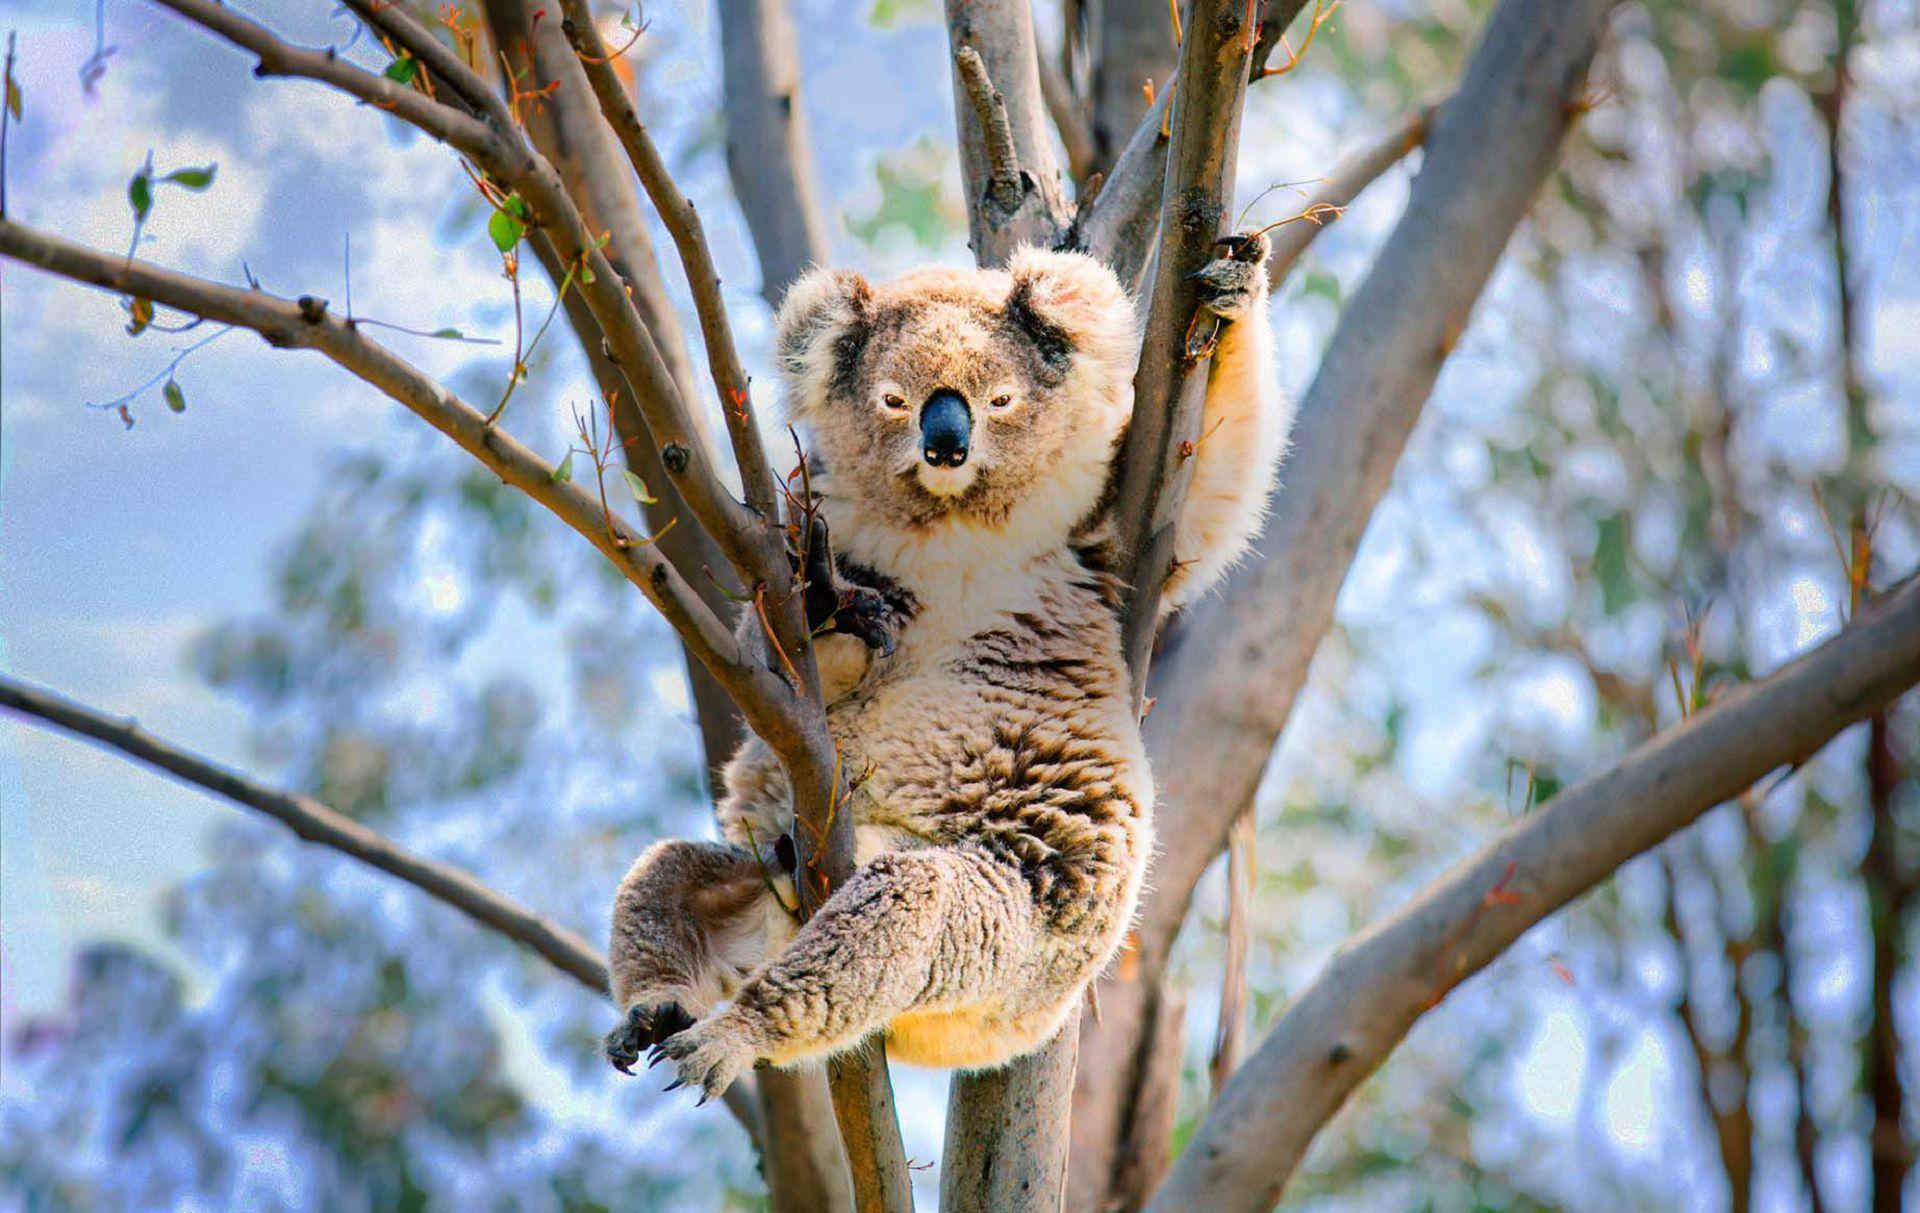 Download Koala wallpapers for mobile phone free Koala HD pictures